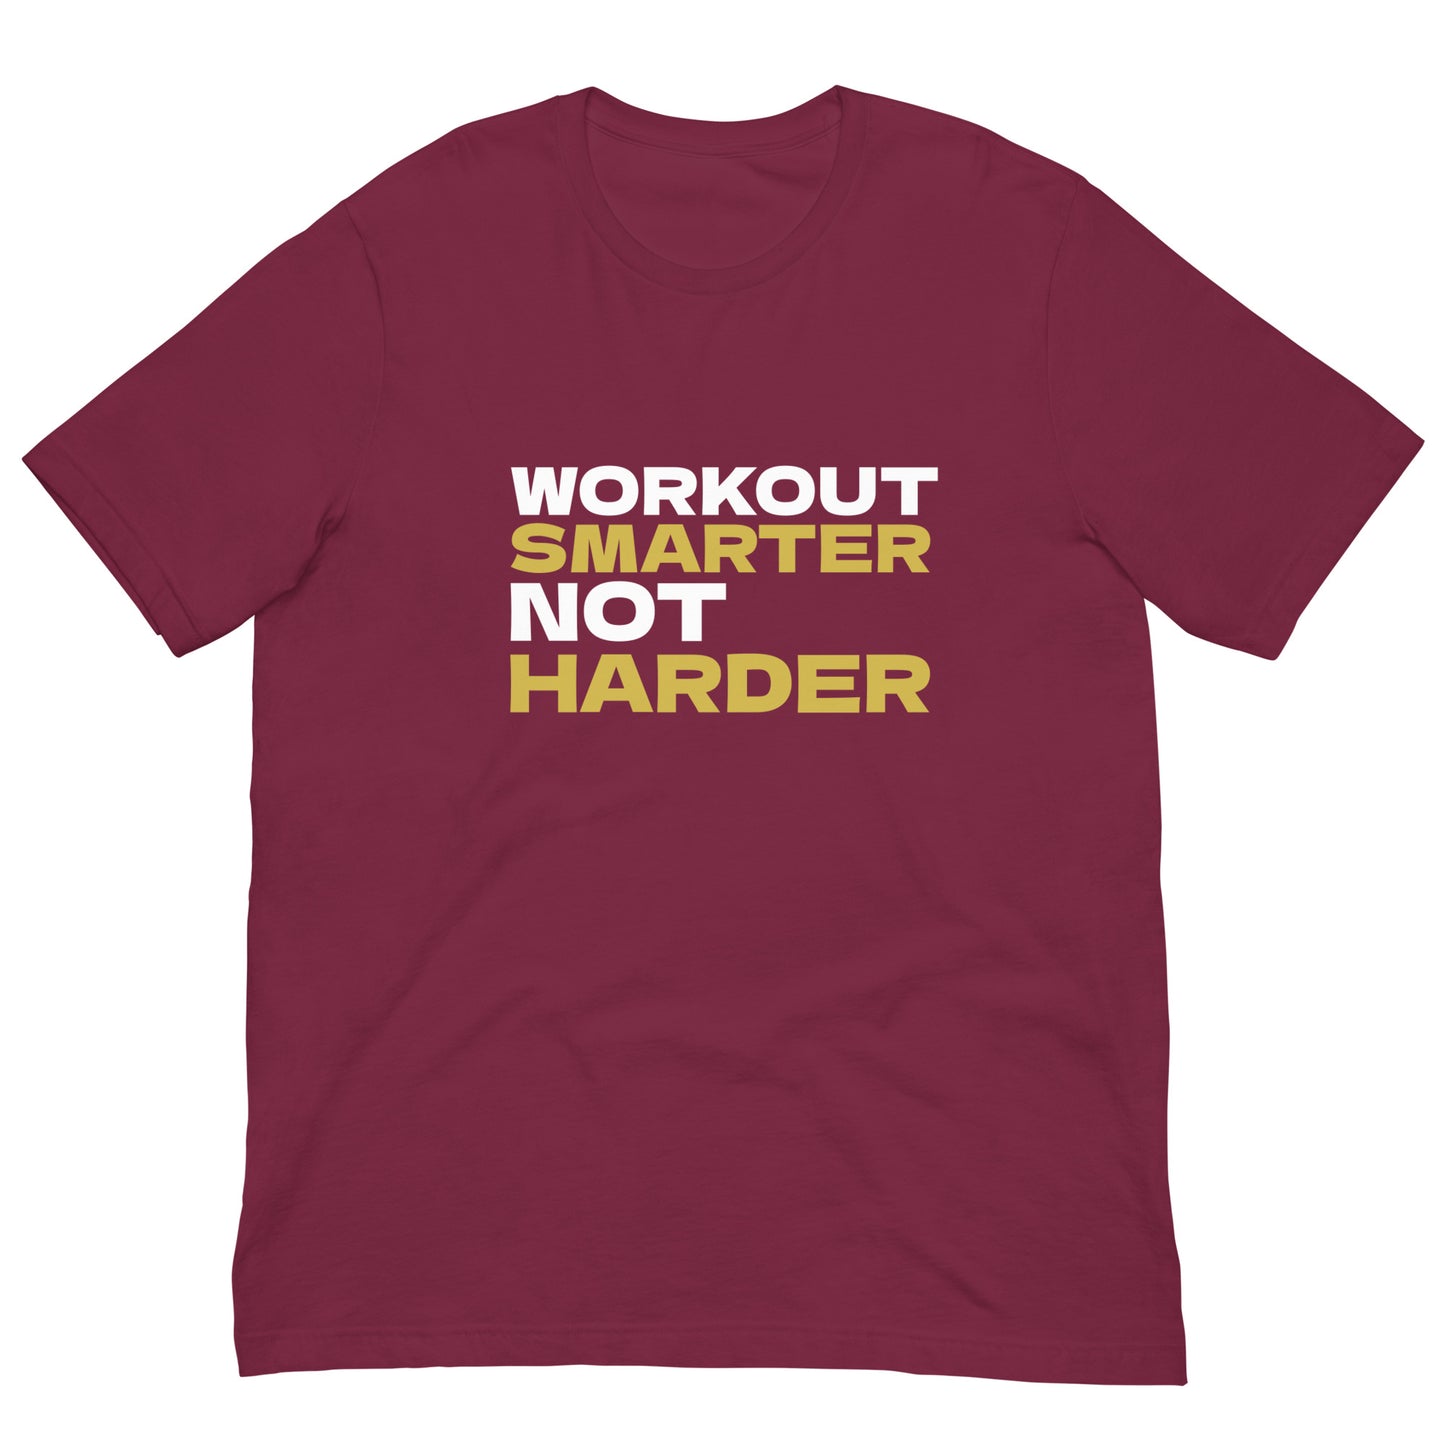 Workout Smarter Not Harder Unisex T-shirt (Maroon)